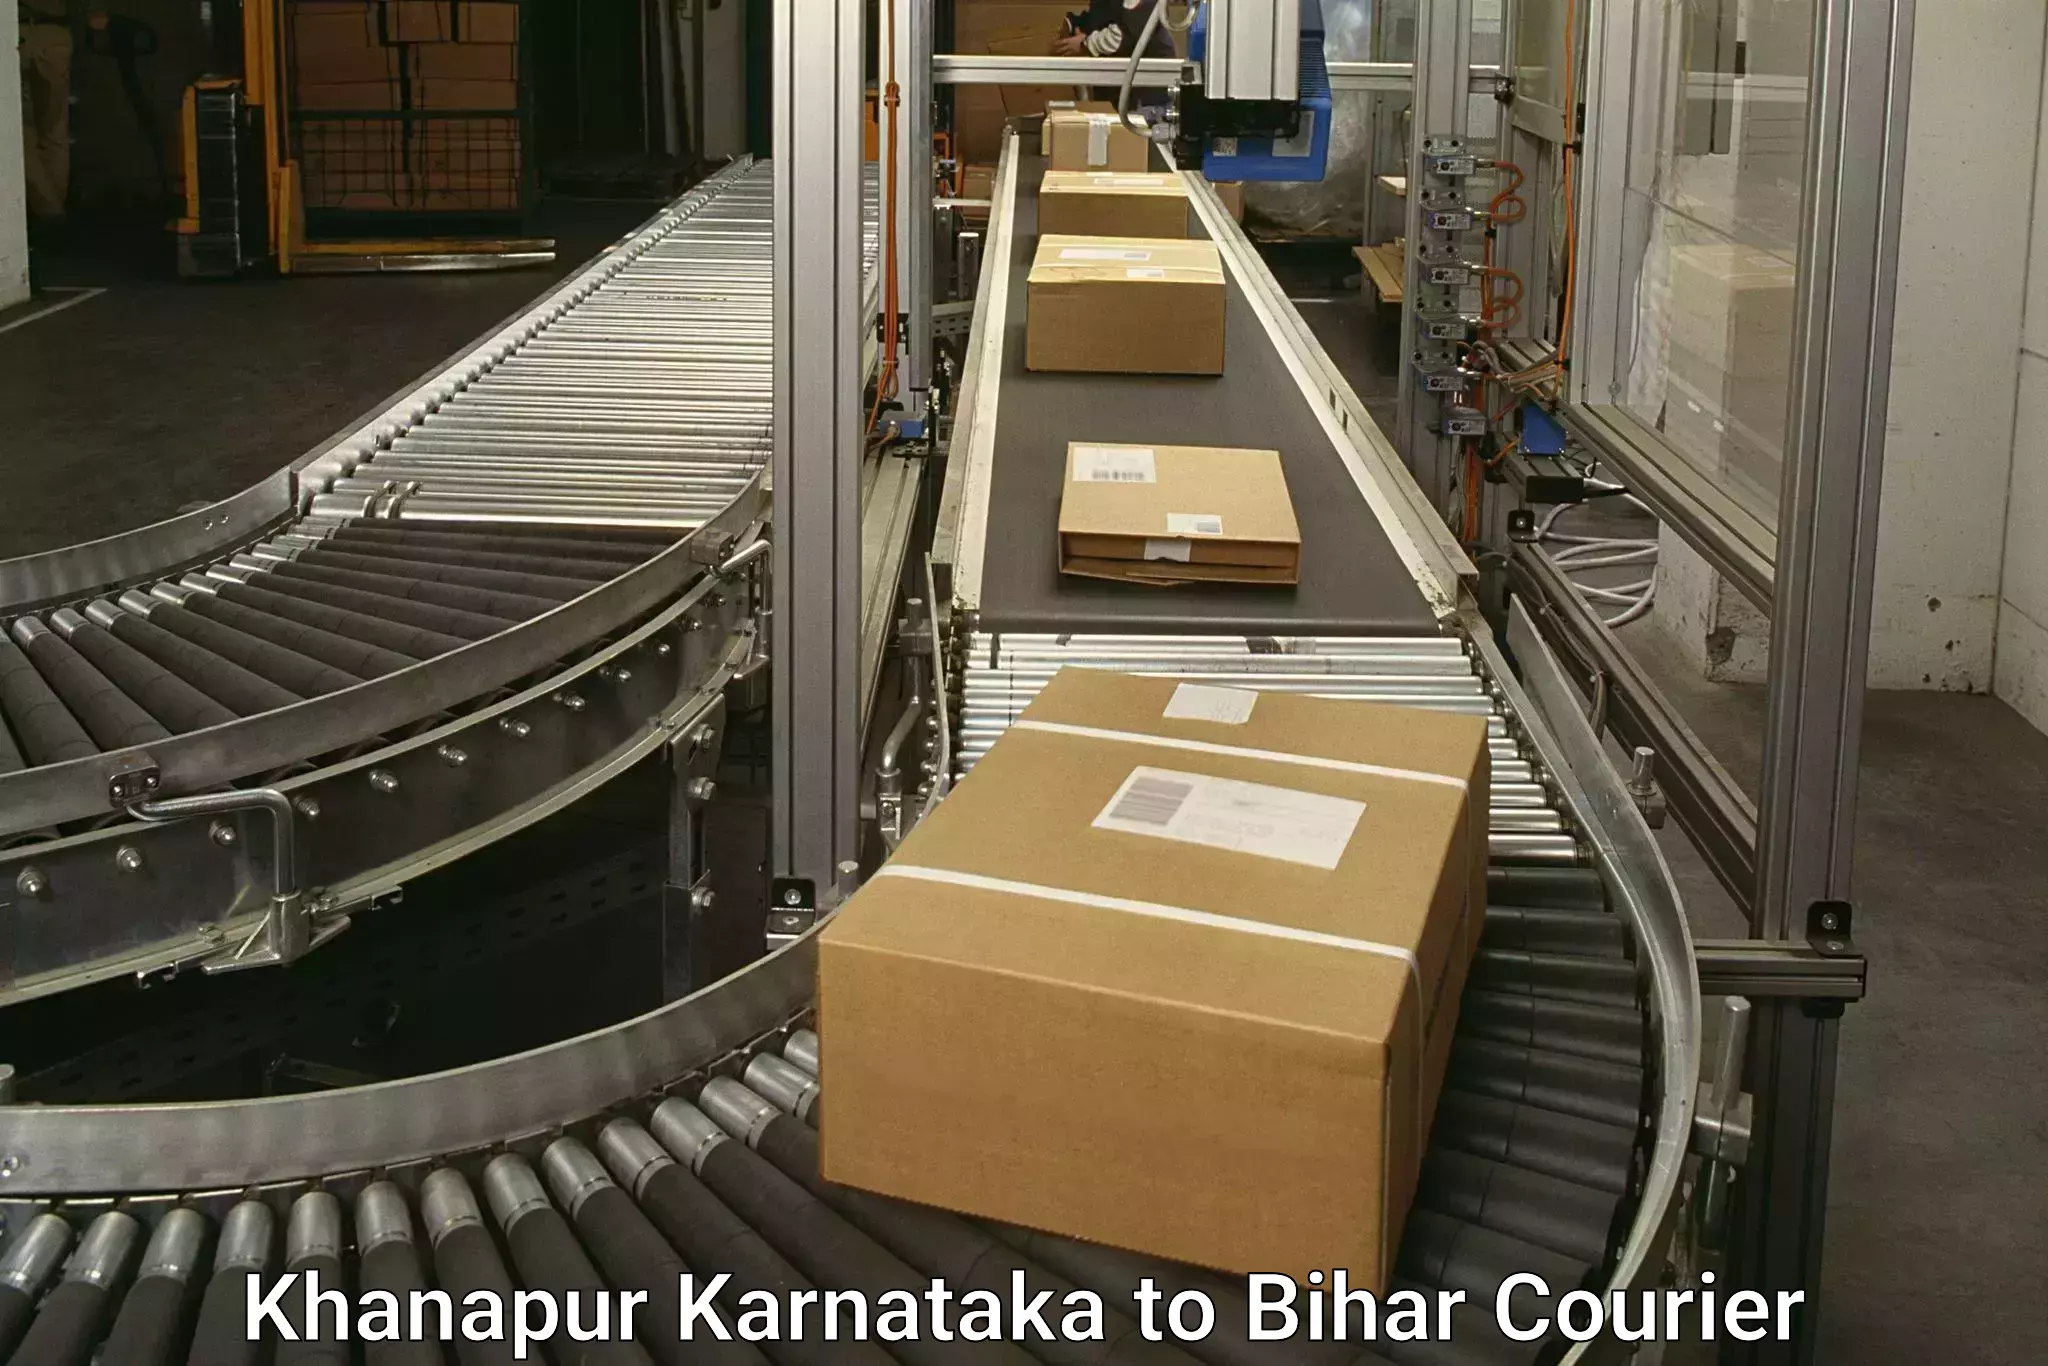 Doorstep delivery service Khanapur Karnataka to Barauni